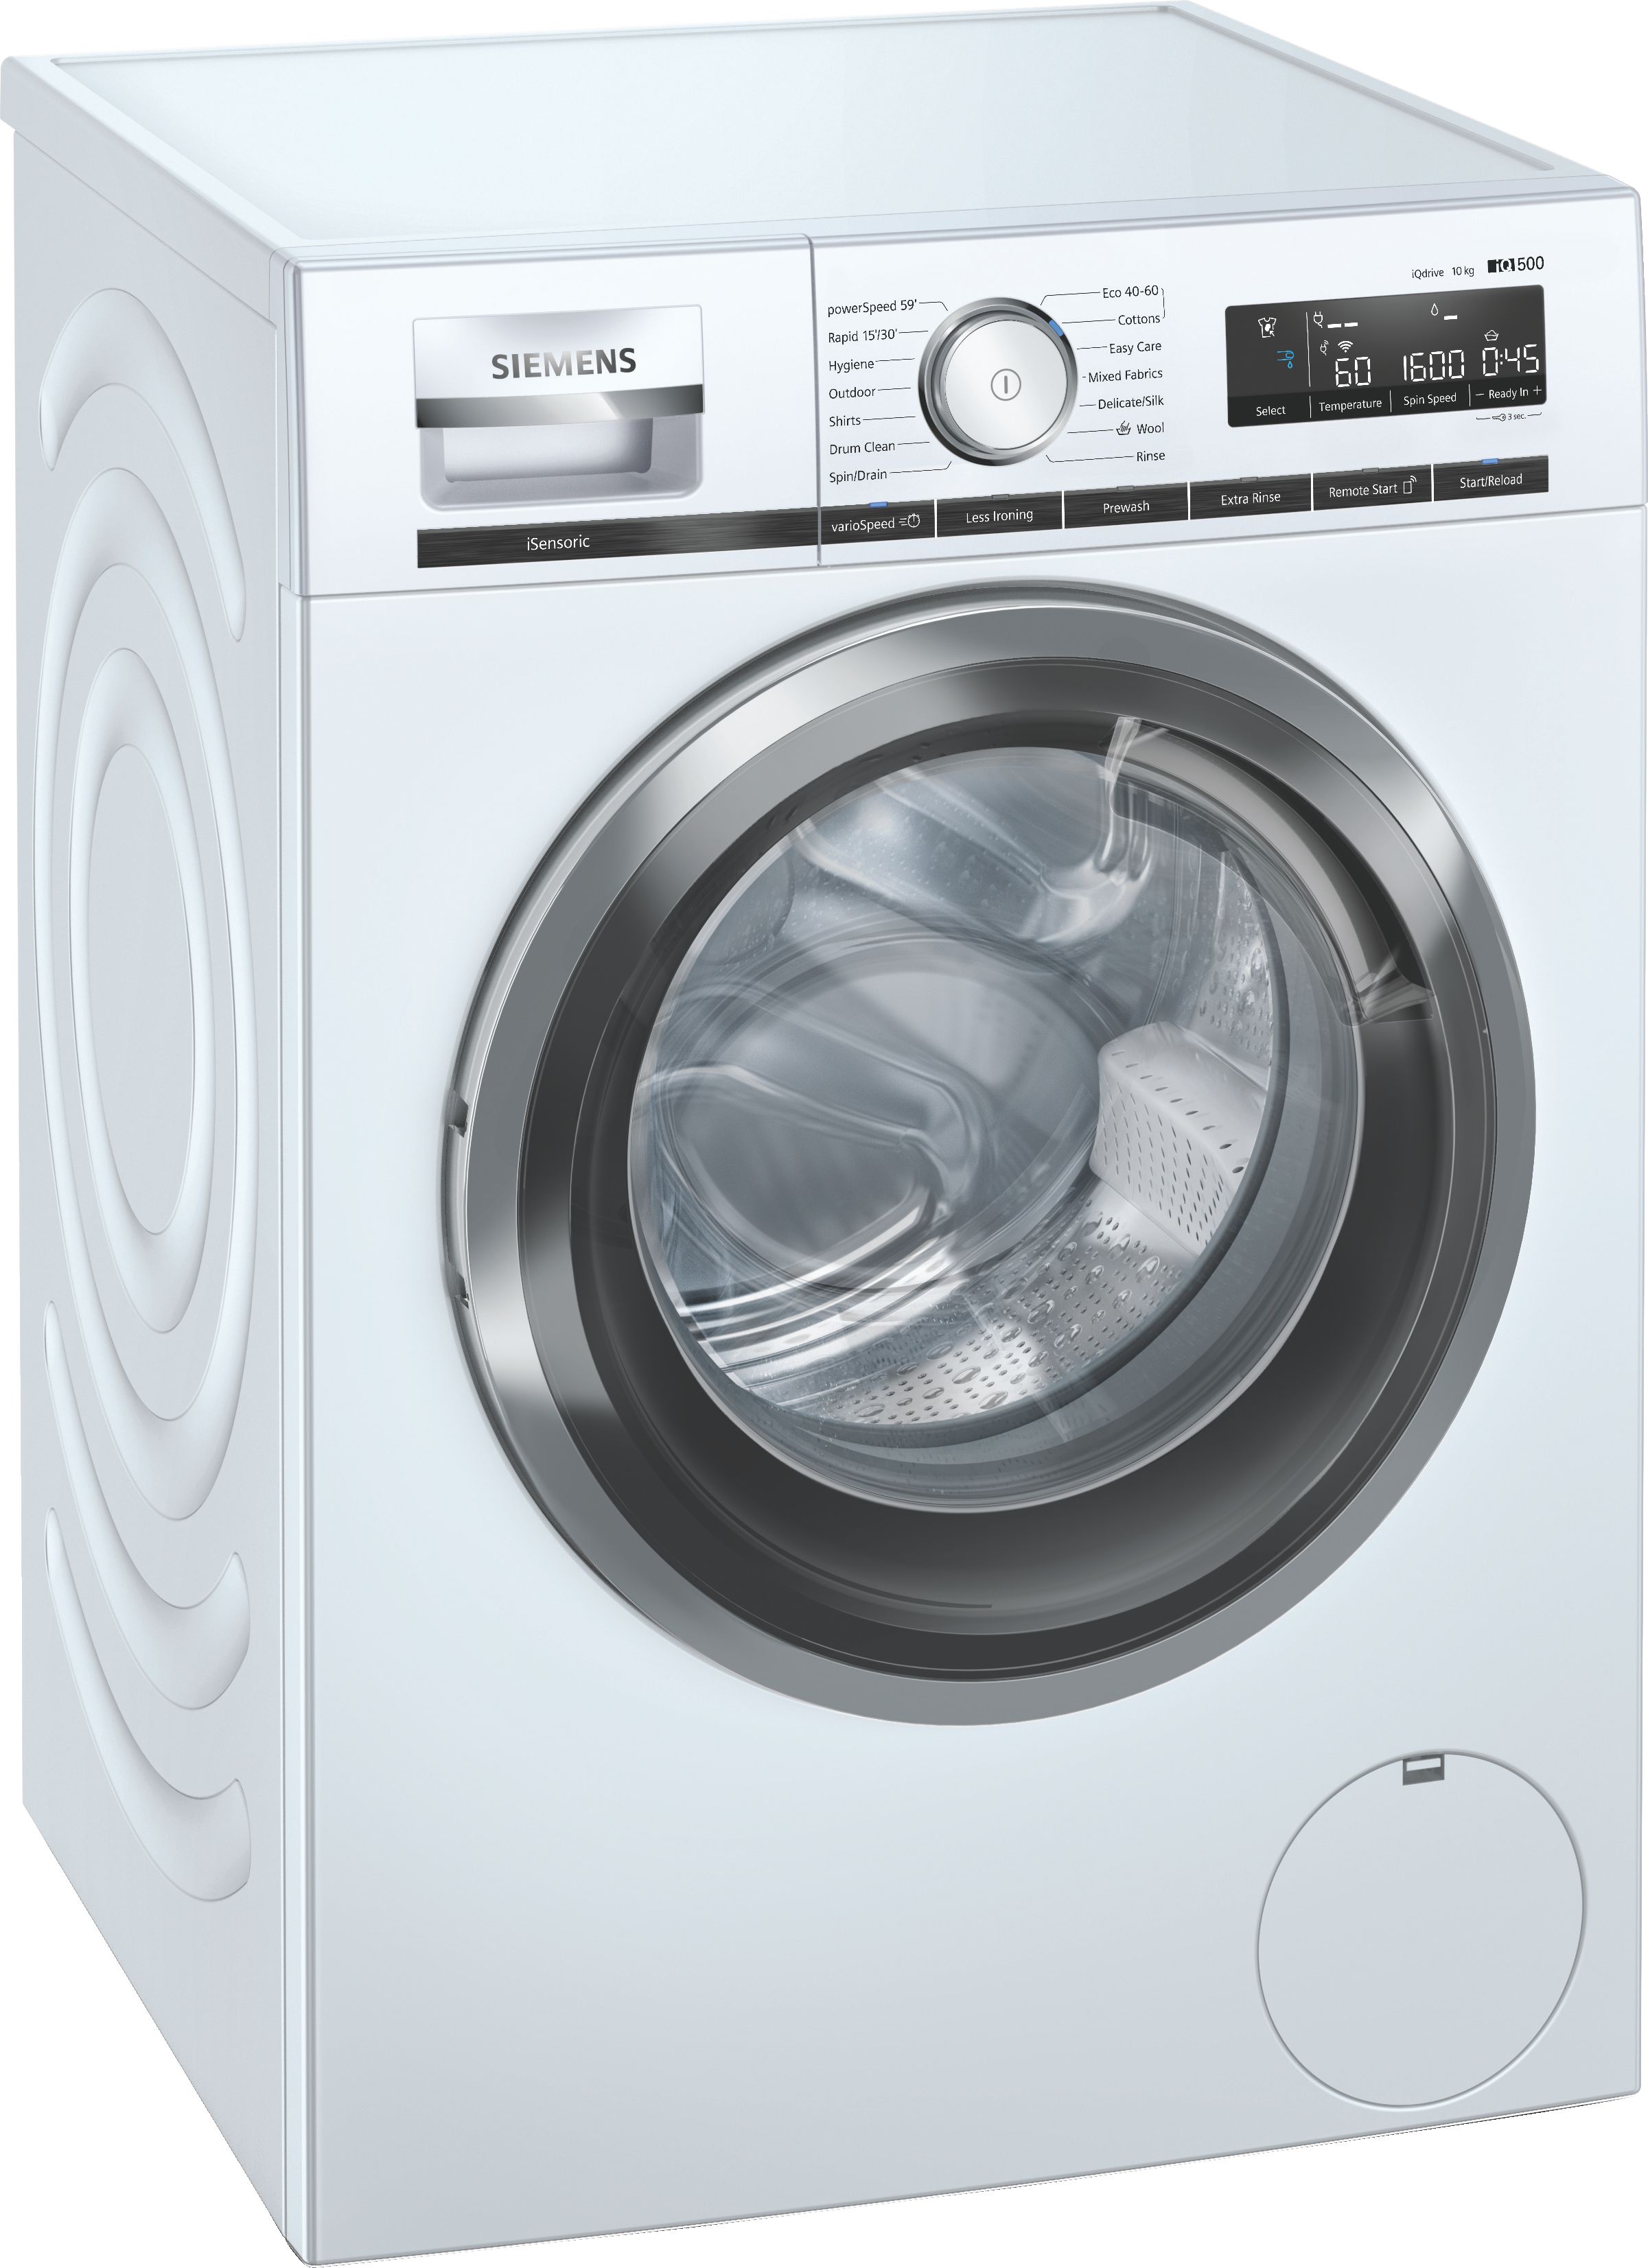 WM16XM81GB SIEMENS Freestanding Washing Machine - 10Kg/1600Spin - PowerSpeed 59 - HomeConnect - IQDrive - VarioSpeed - LED Display - White with Chrome/Black Door  - B 
Energy